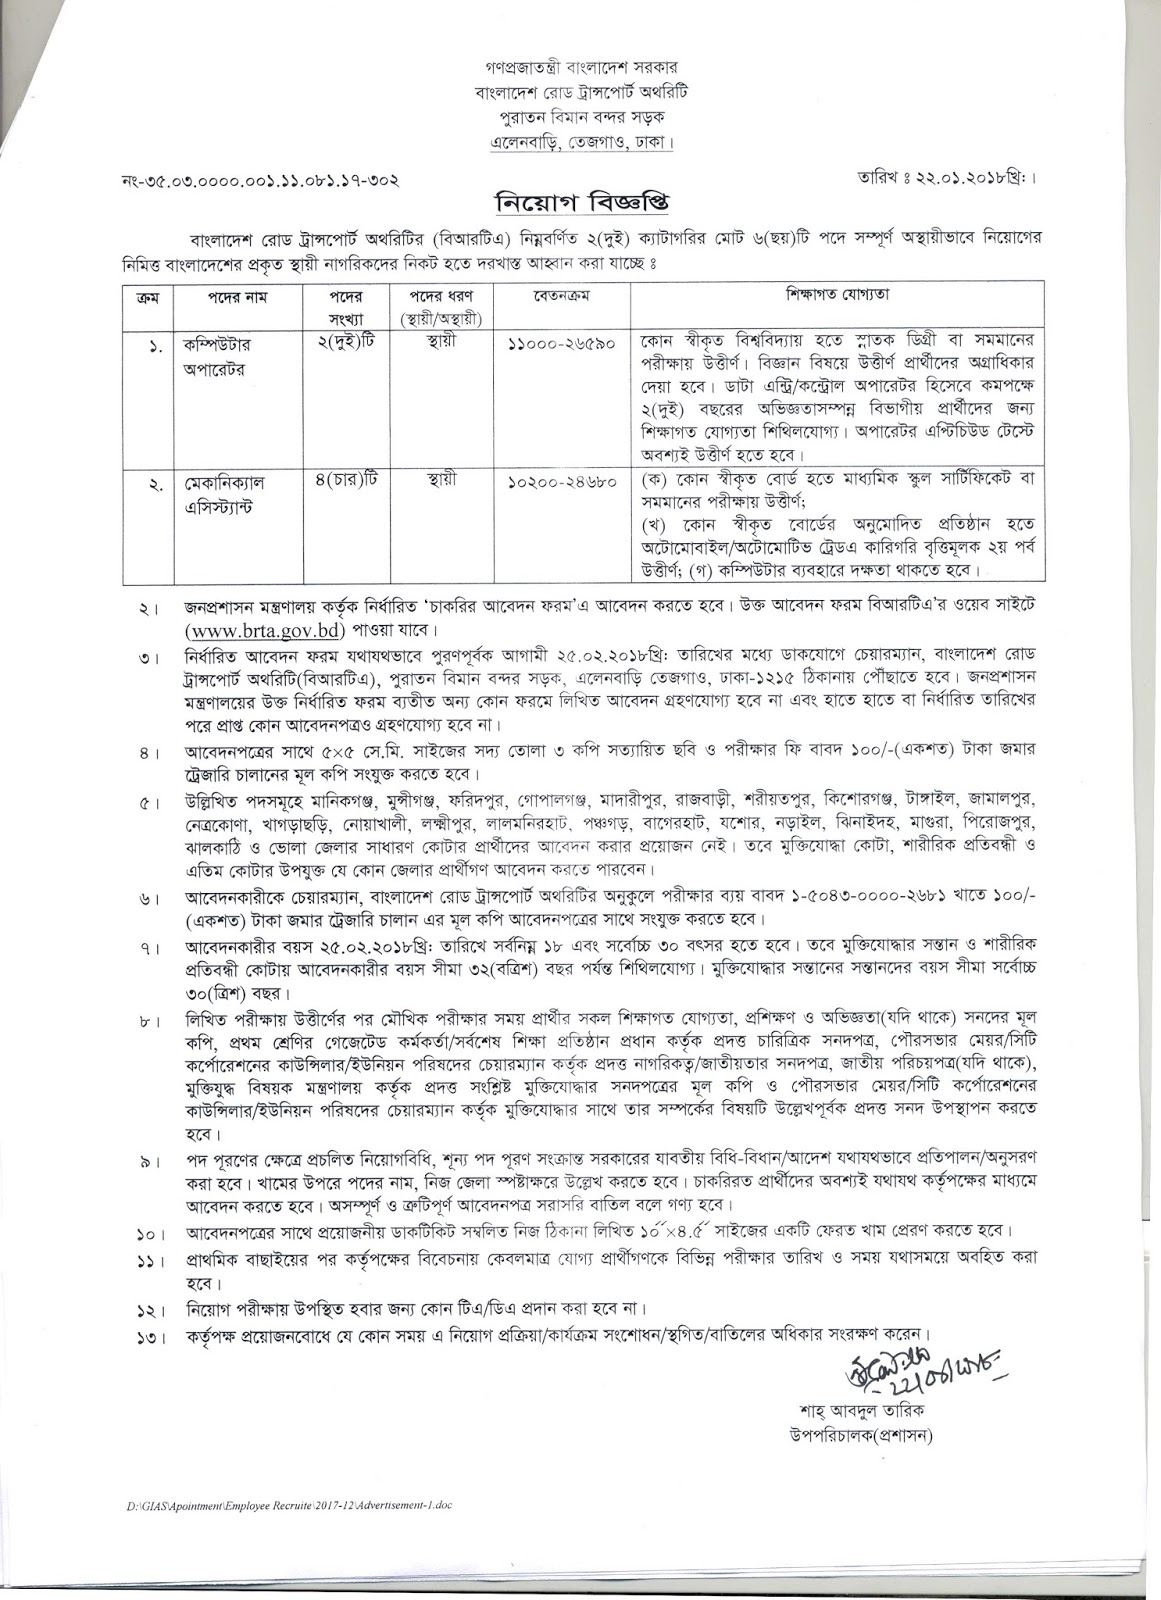 BRTA - Bangladesh Road Transport Authority Job Circular 2018